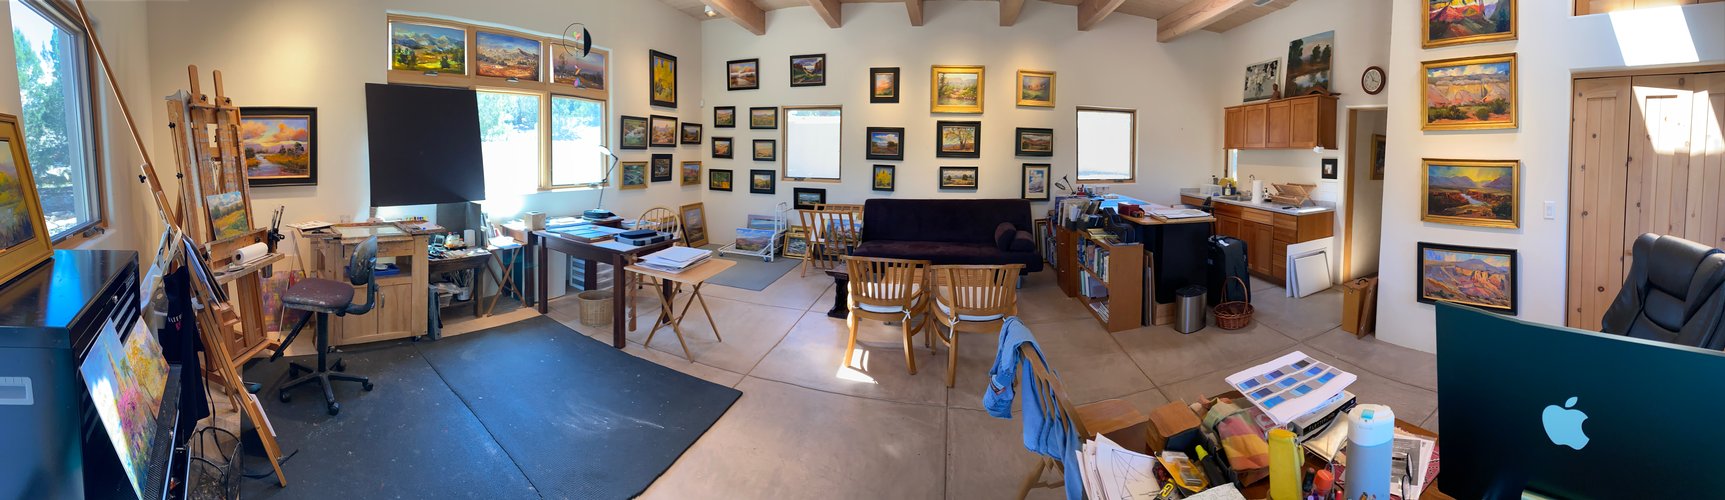 Karen's Santa Fe Studio Large Image